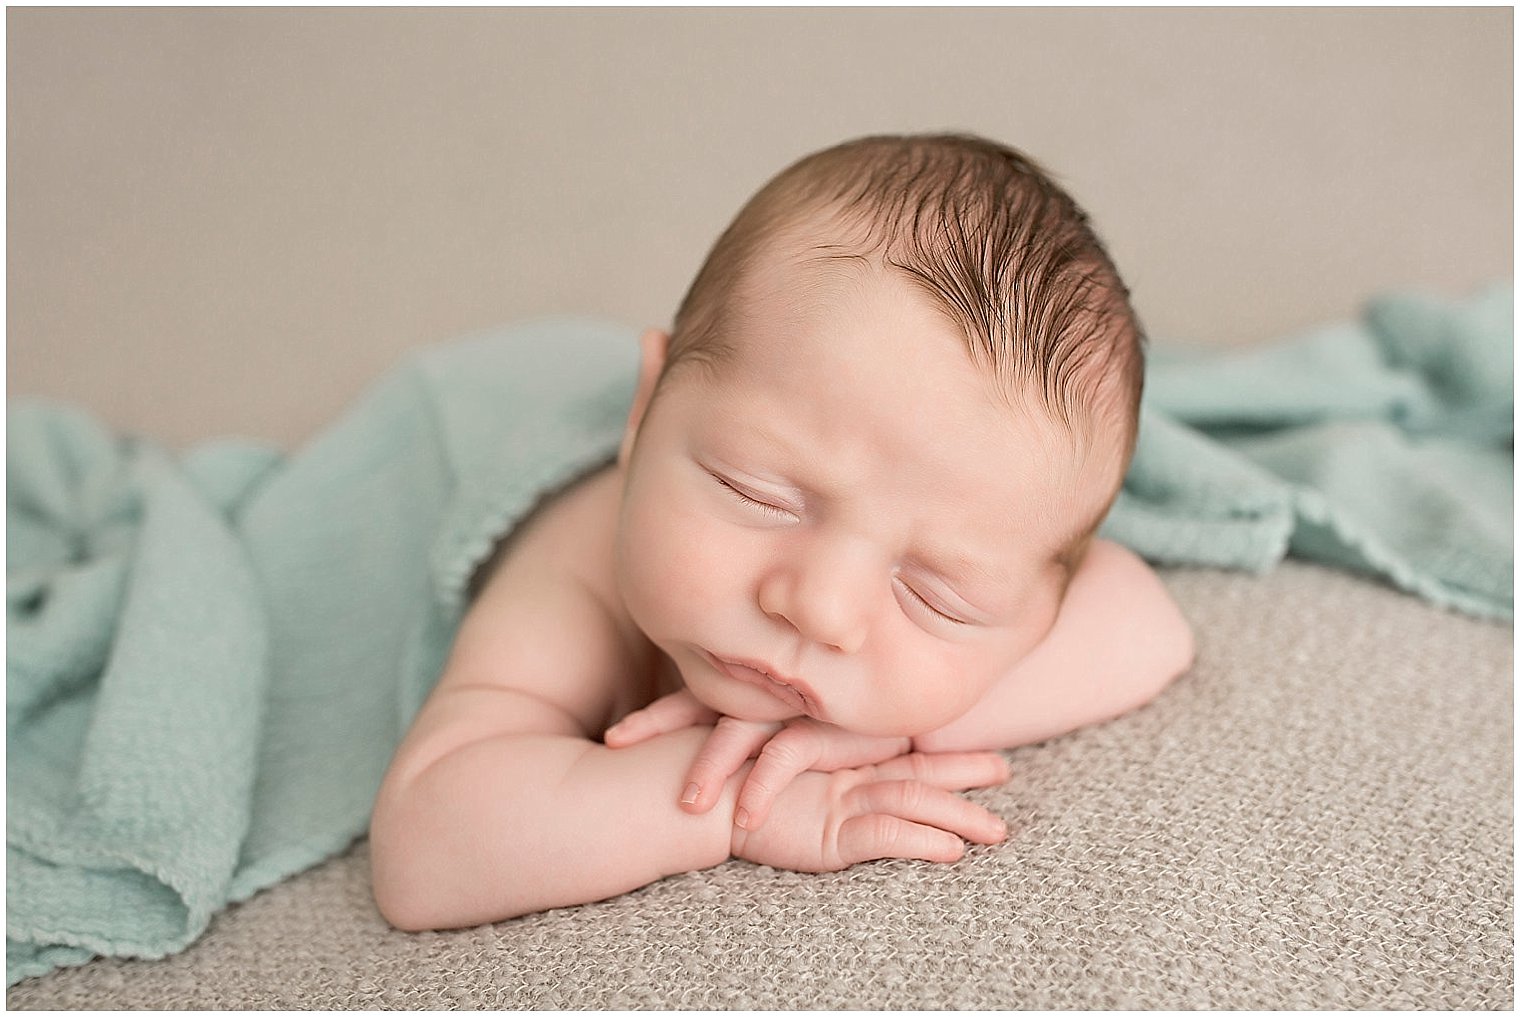 Newborn boy with chin on hands | Photo by Idalia Photography